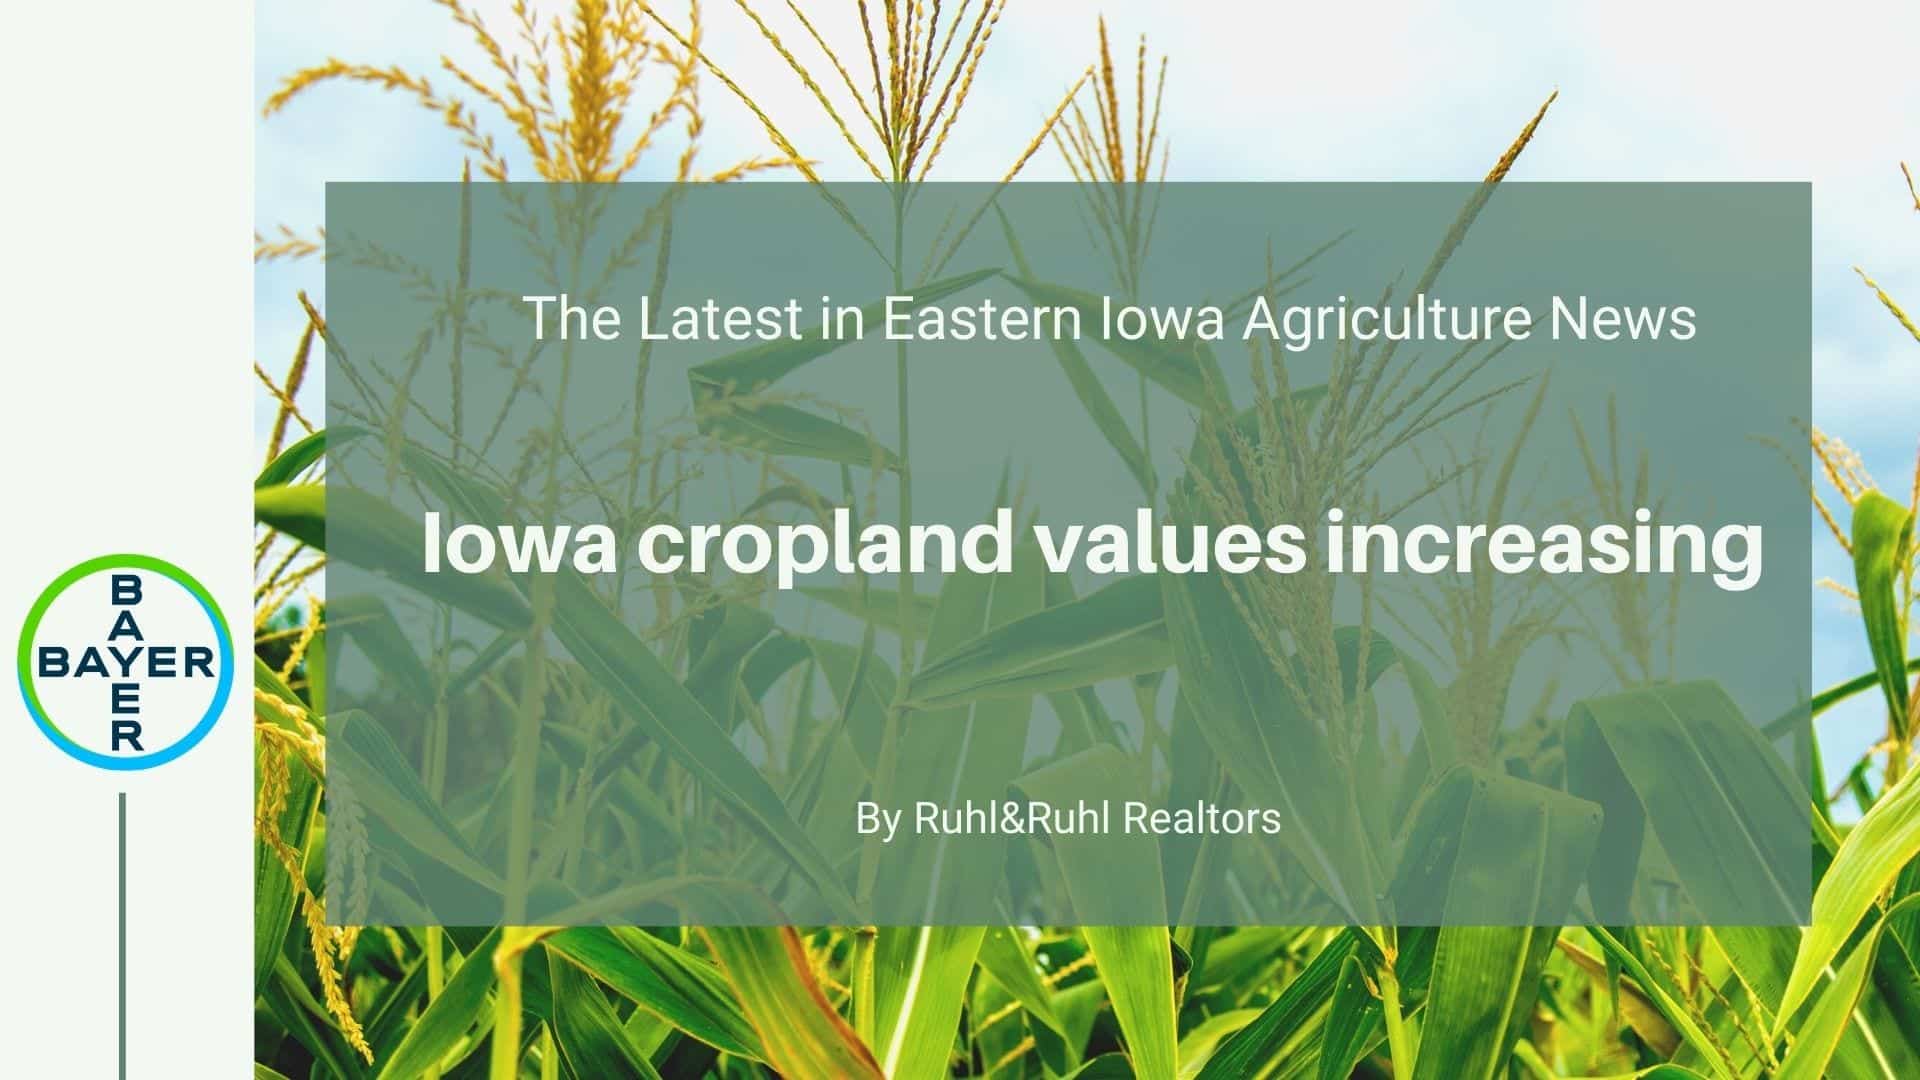 Iowa cropland values increasing